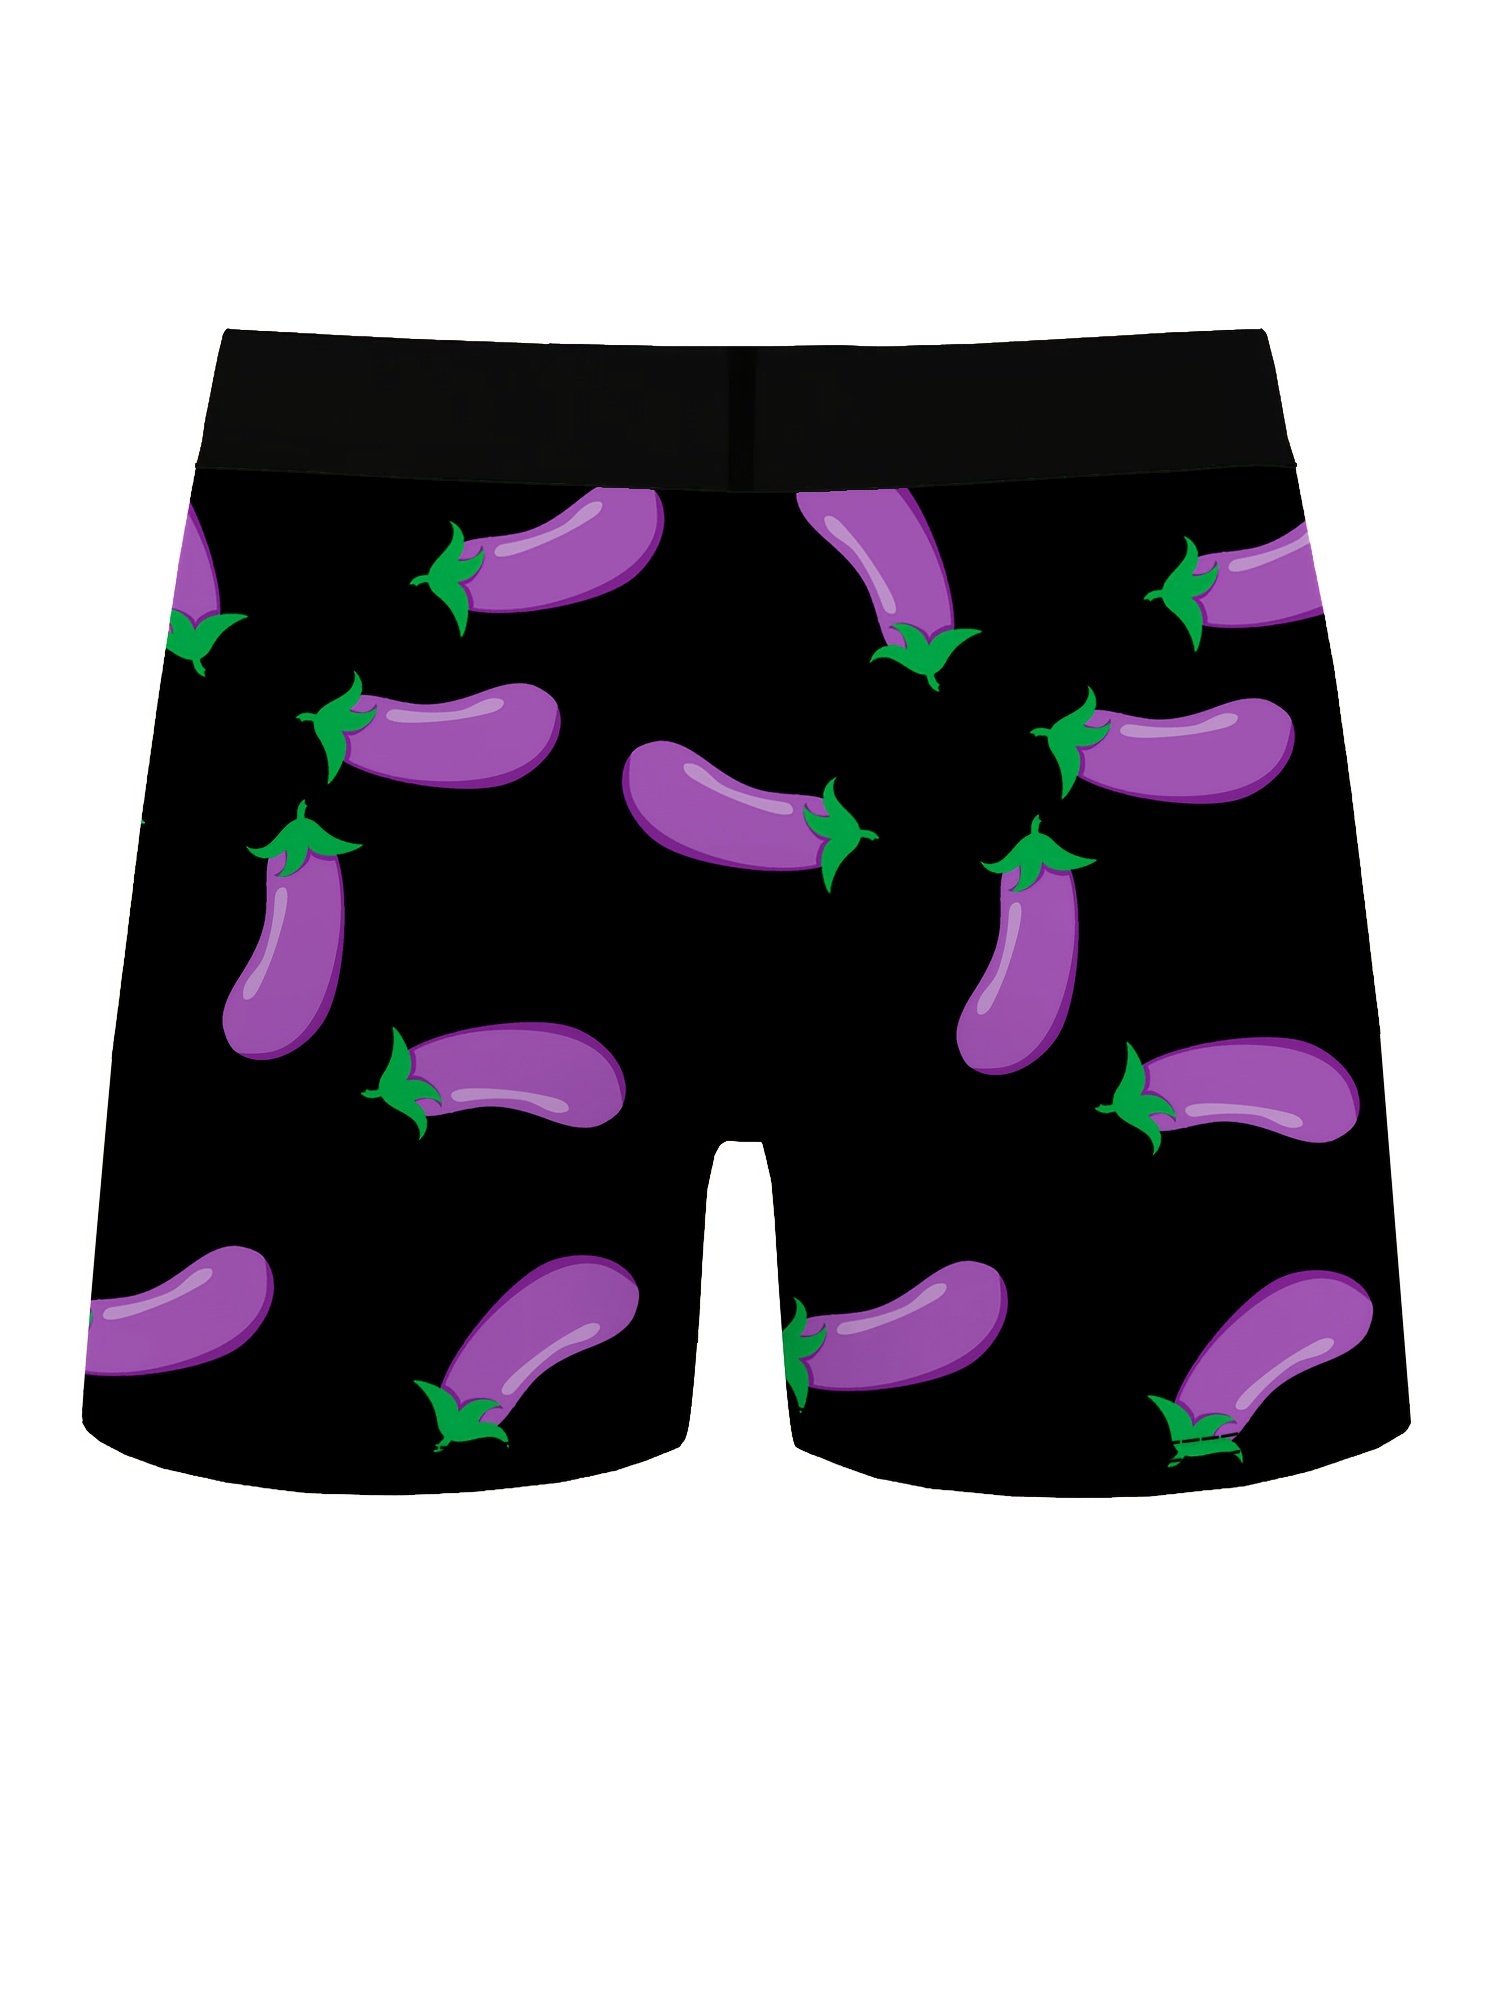 mens underwear purple eggplant print fashion novelty boxer briefs shorts breathable comfy high stretch boxer trunks details 4